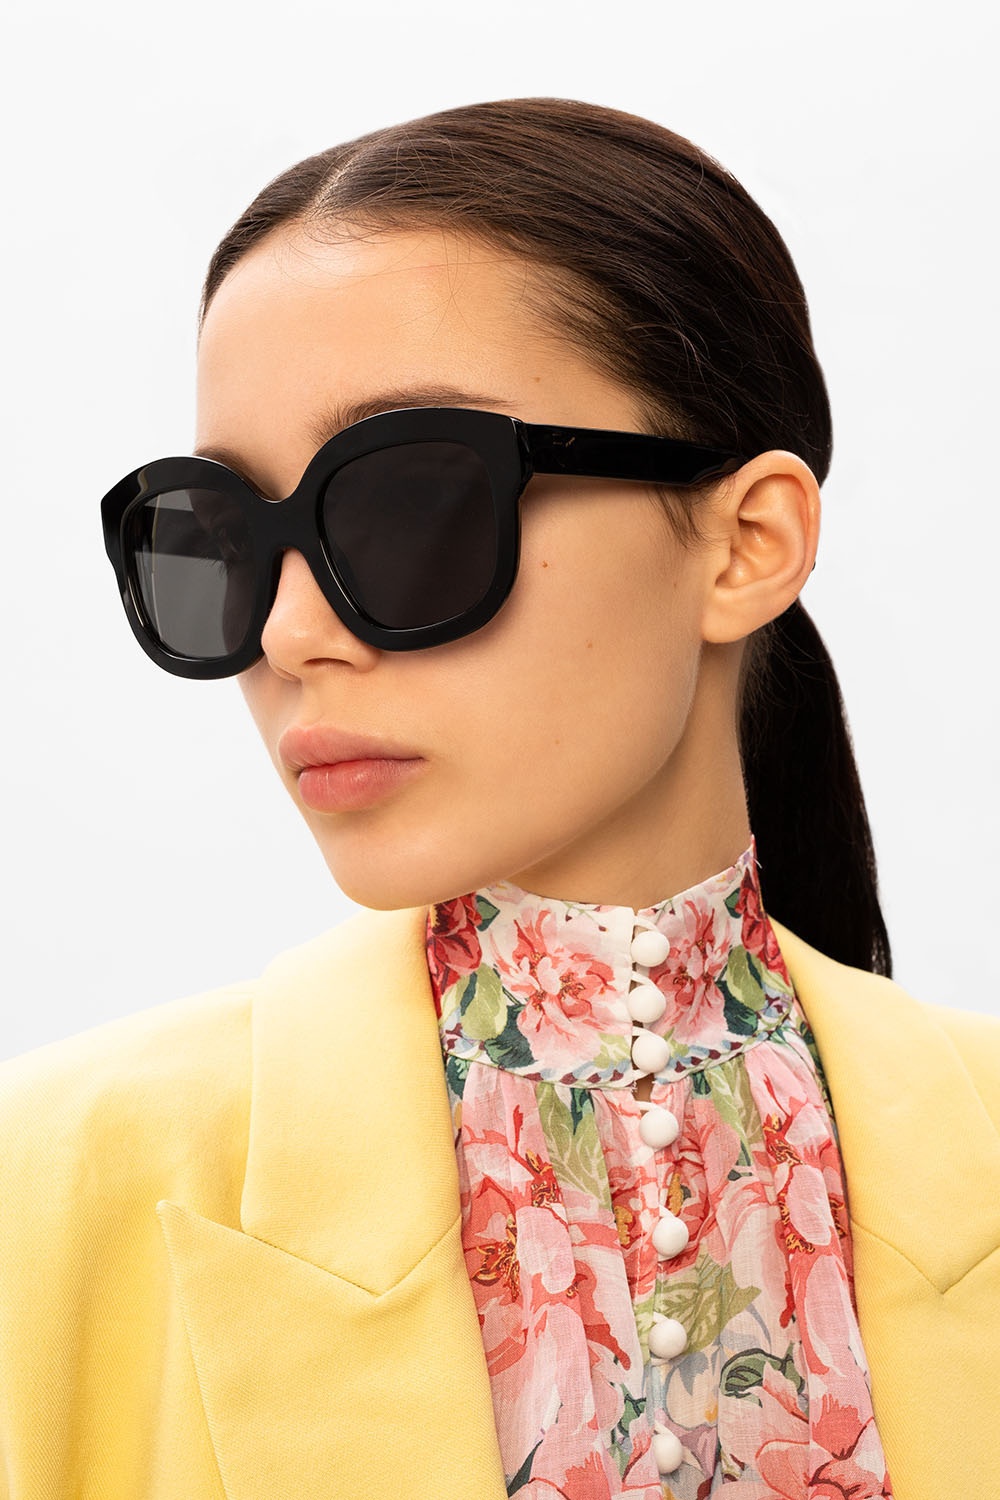 Emmanuelle Khanh Sunglasses with logo